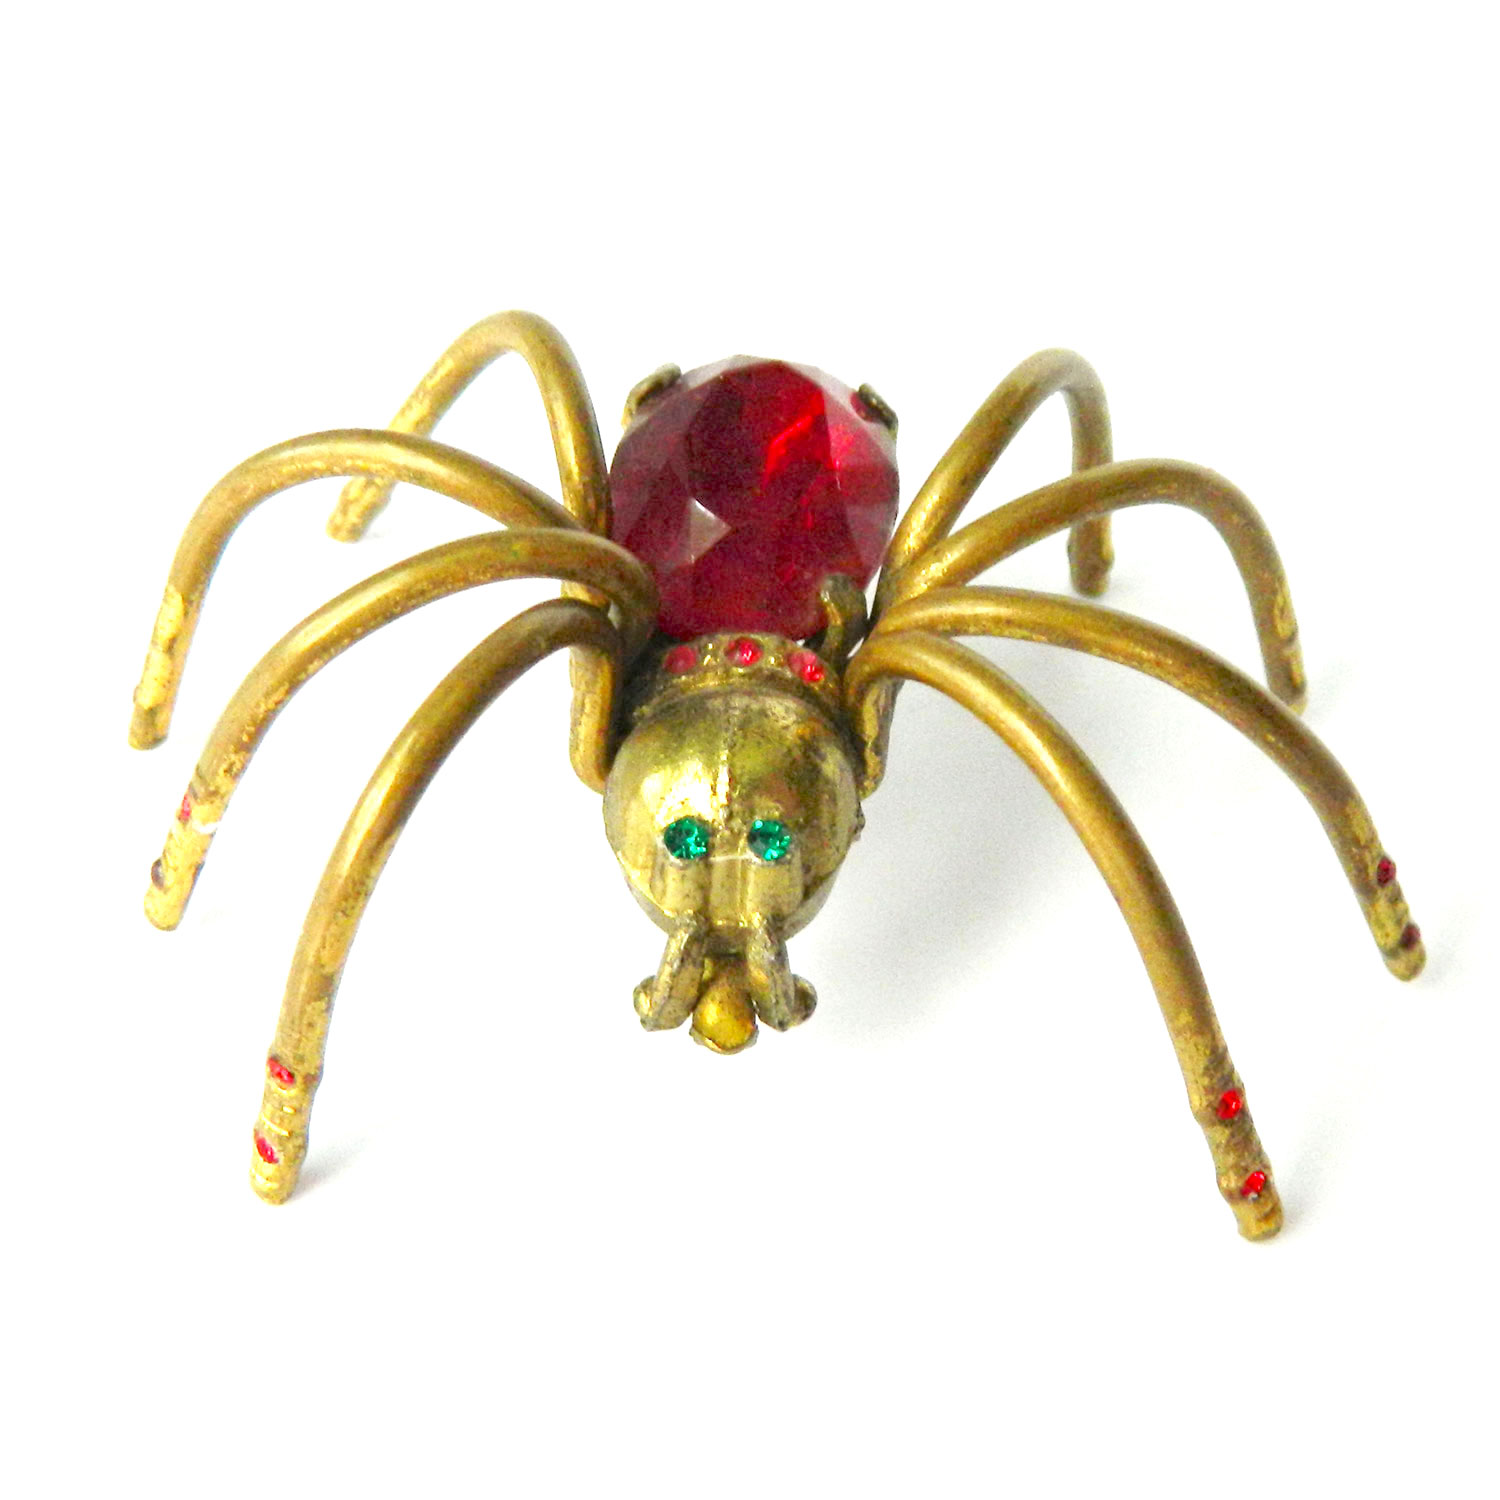 Rhinestone spider brooch